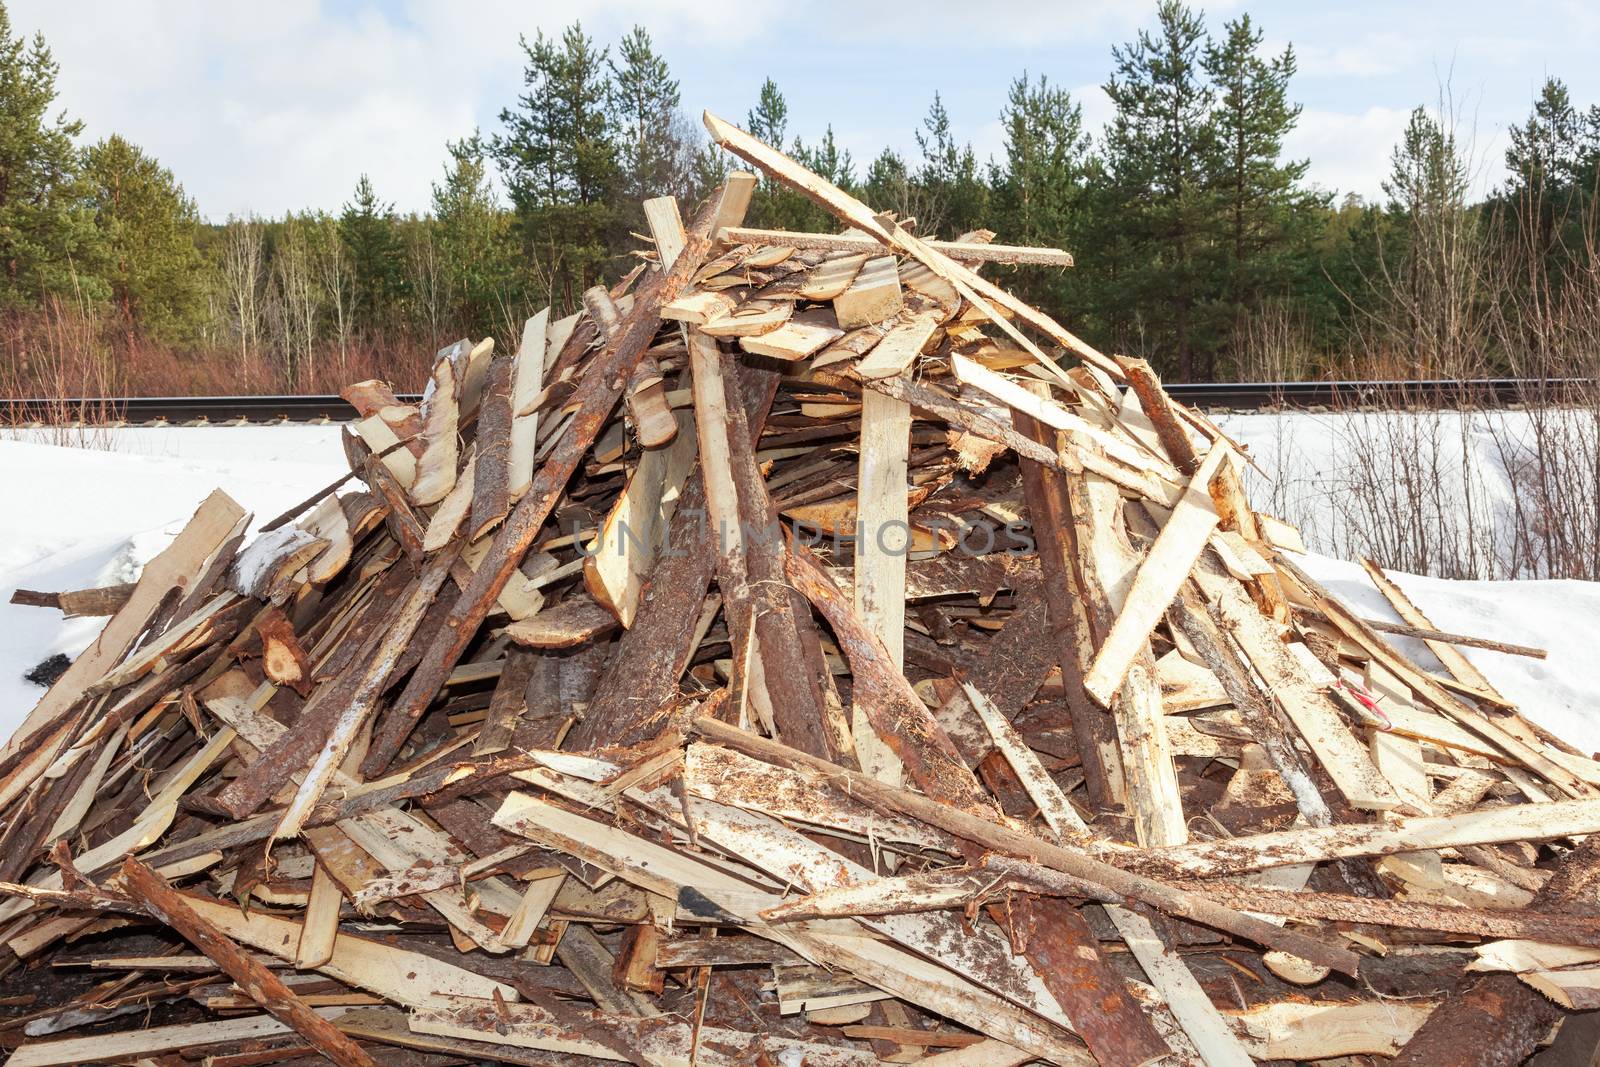 Pile of boards procured as firewood  by AleksandrN